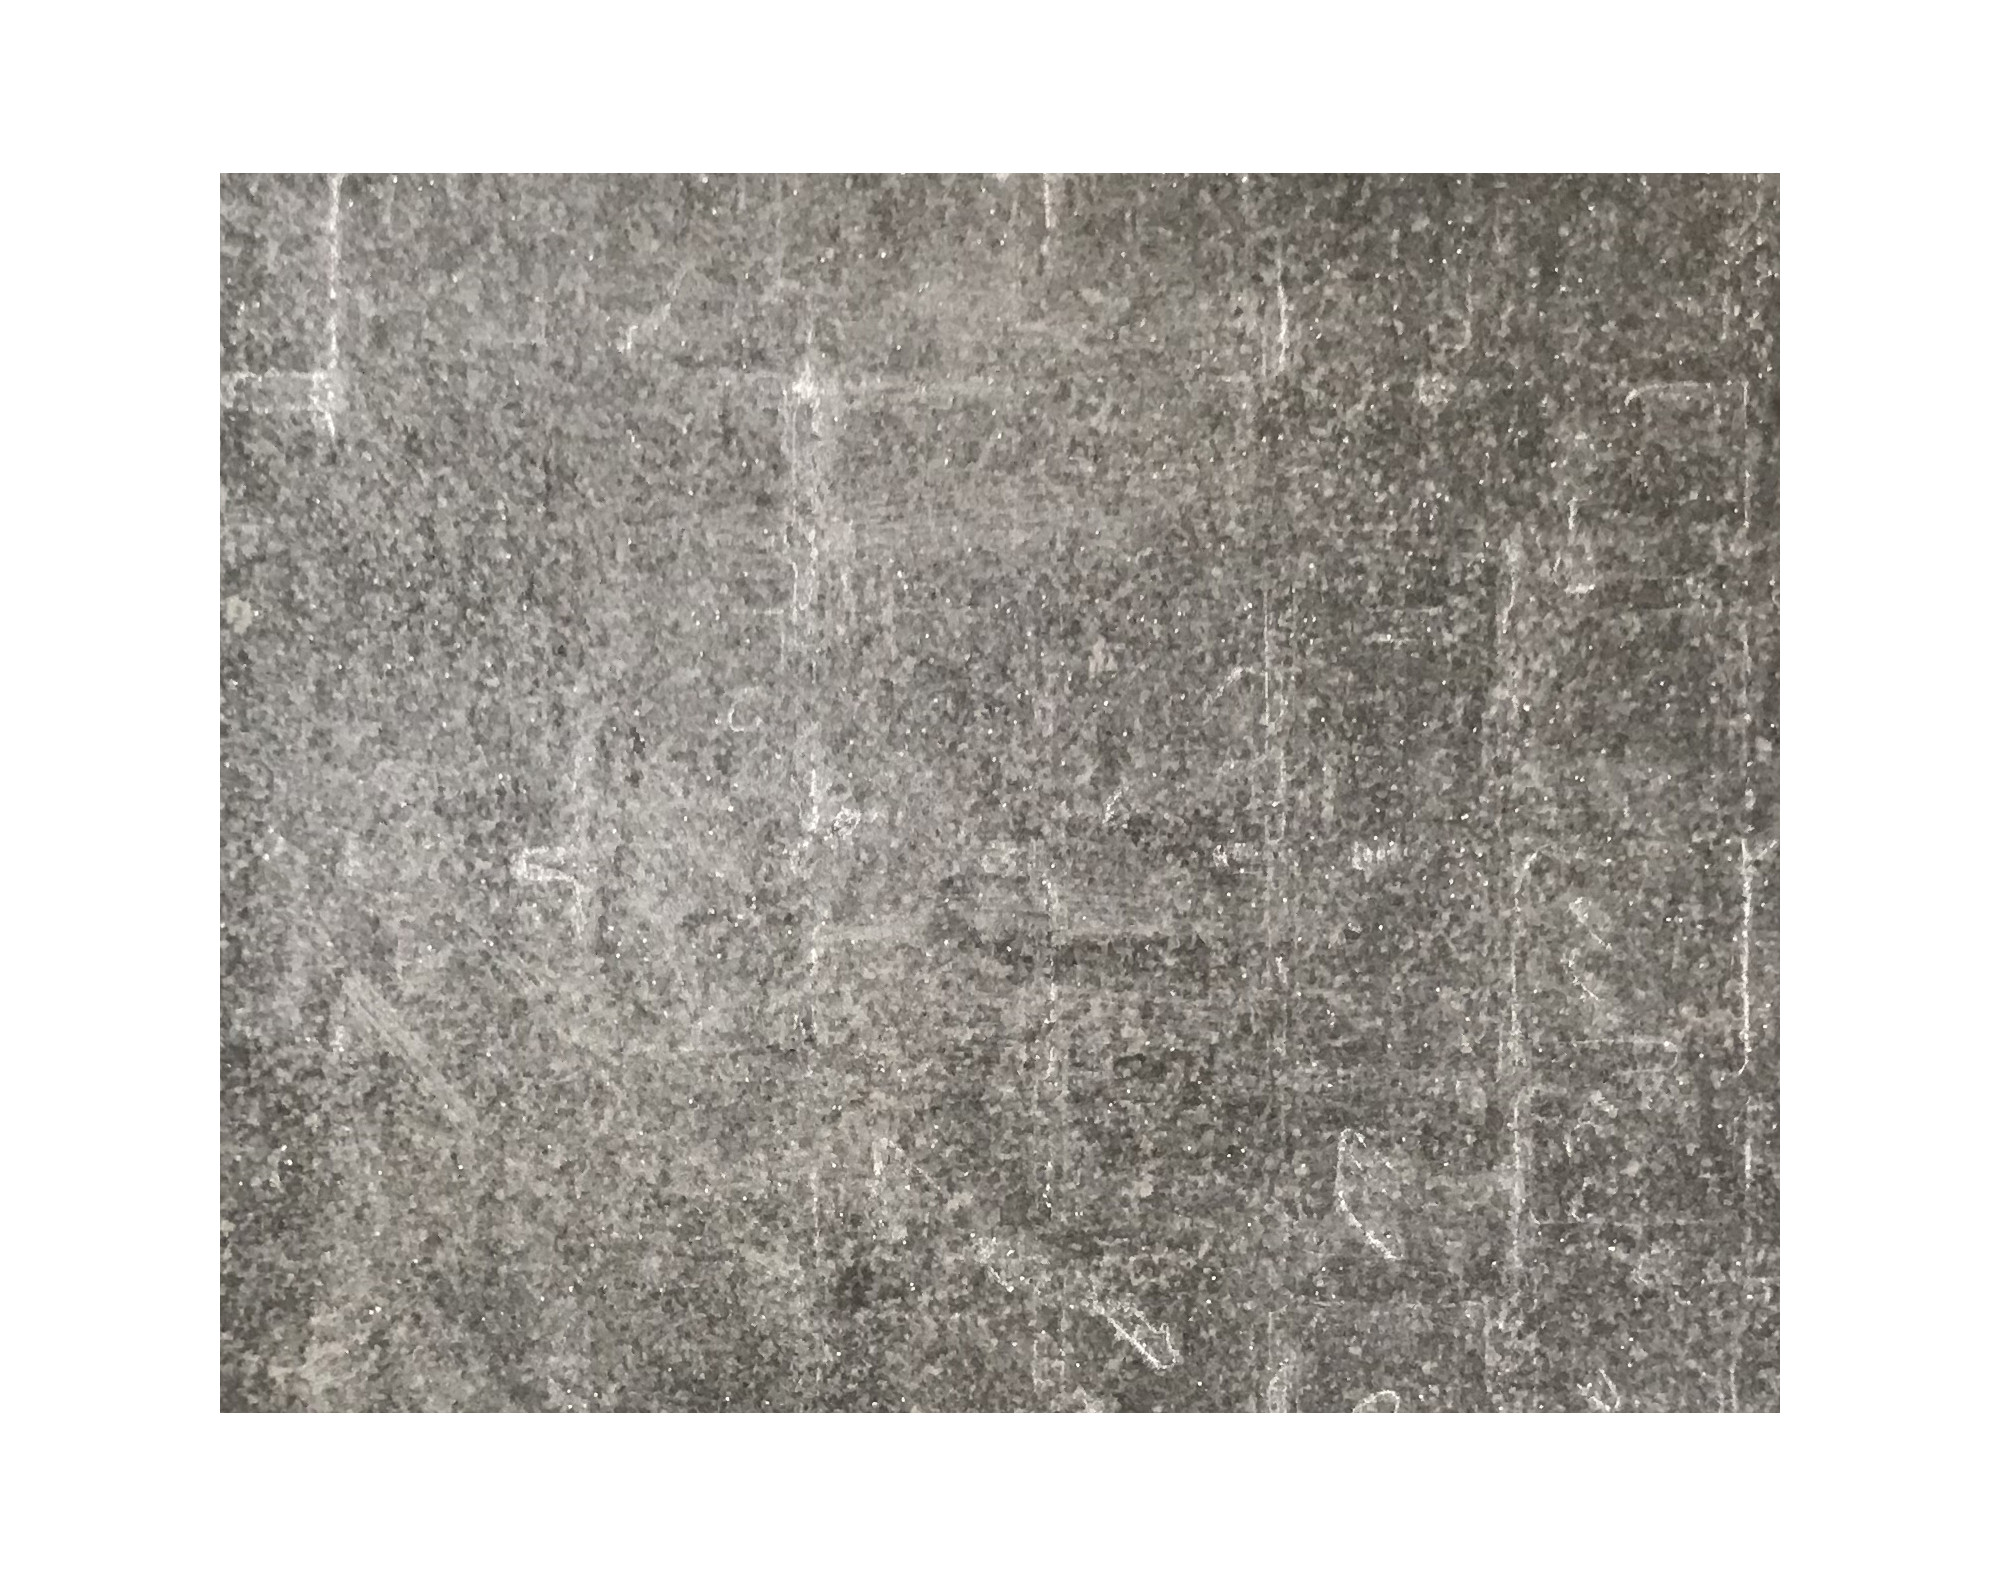 Harmo roc maranelloset, keramiek-serie, 8-vormig d:5,00mx7,70m, zand zwart, keramisch porselein